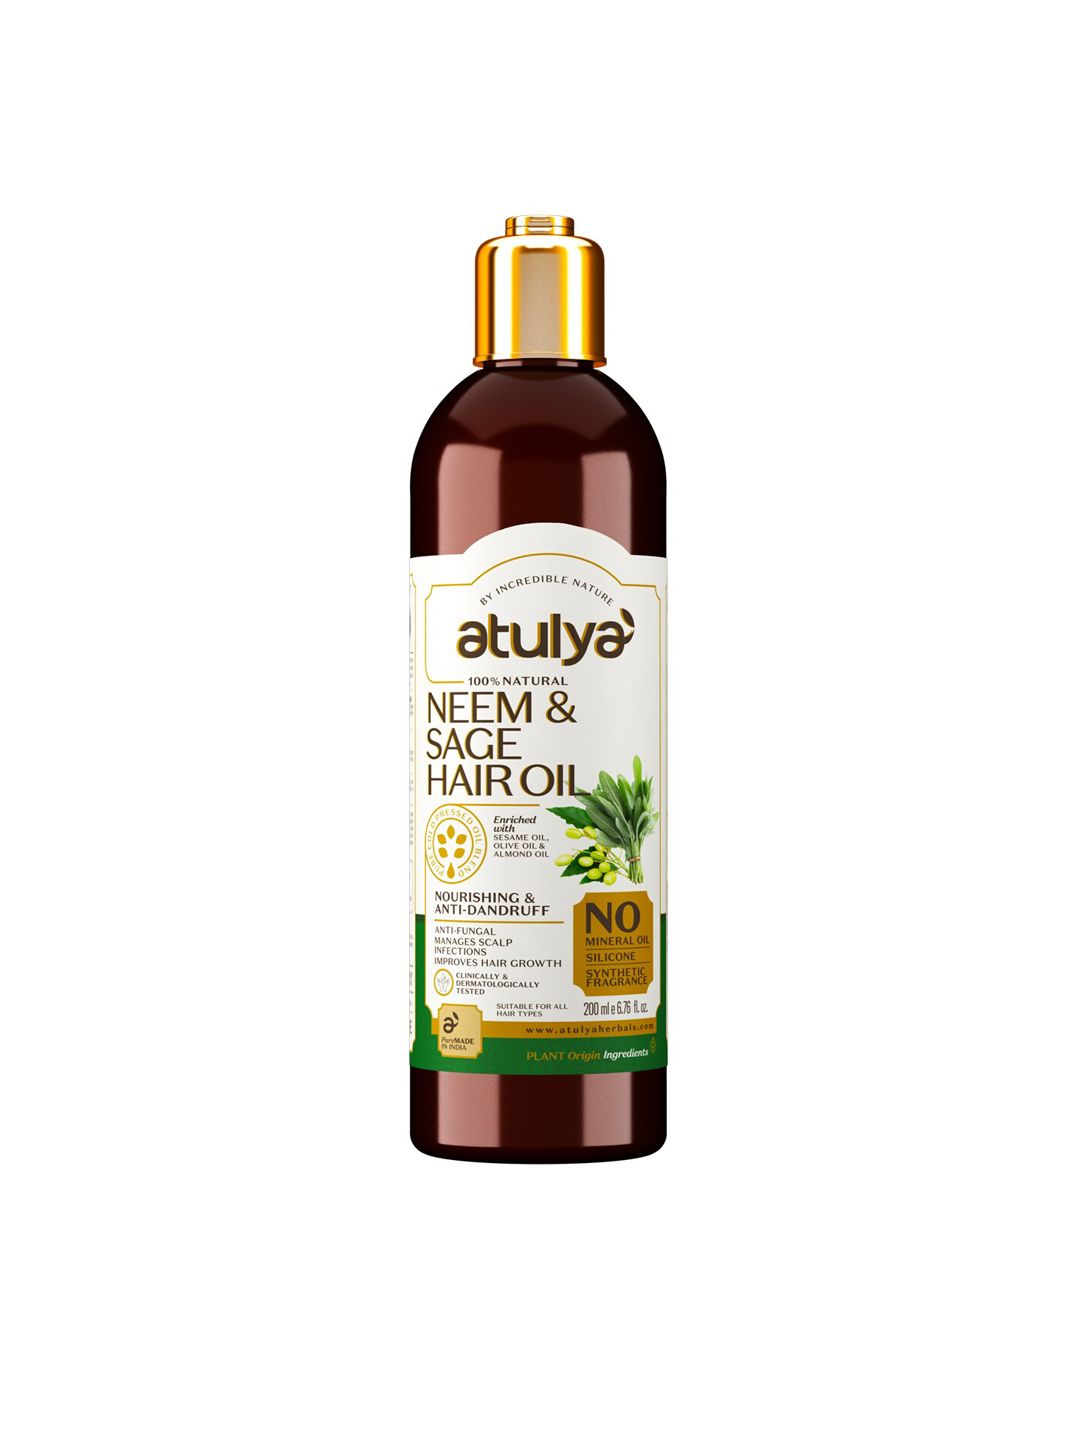 Atulya Neem & Sage Hair Oil 200 ml Price in India